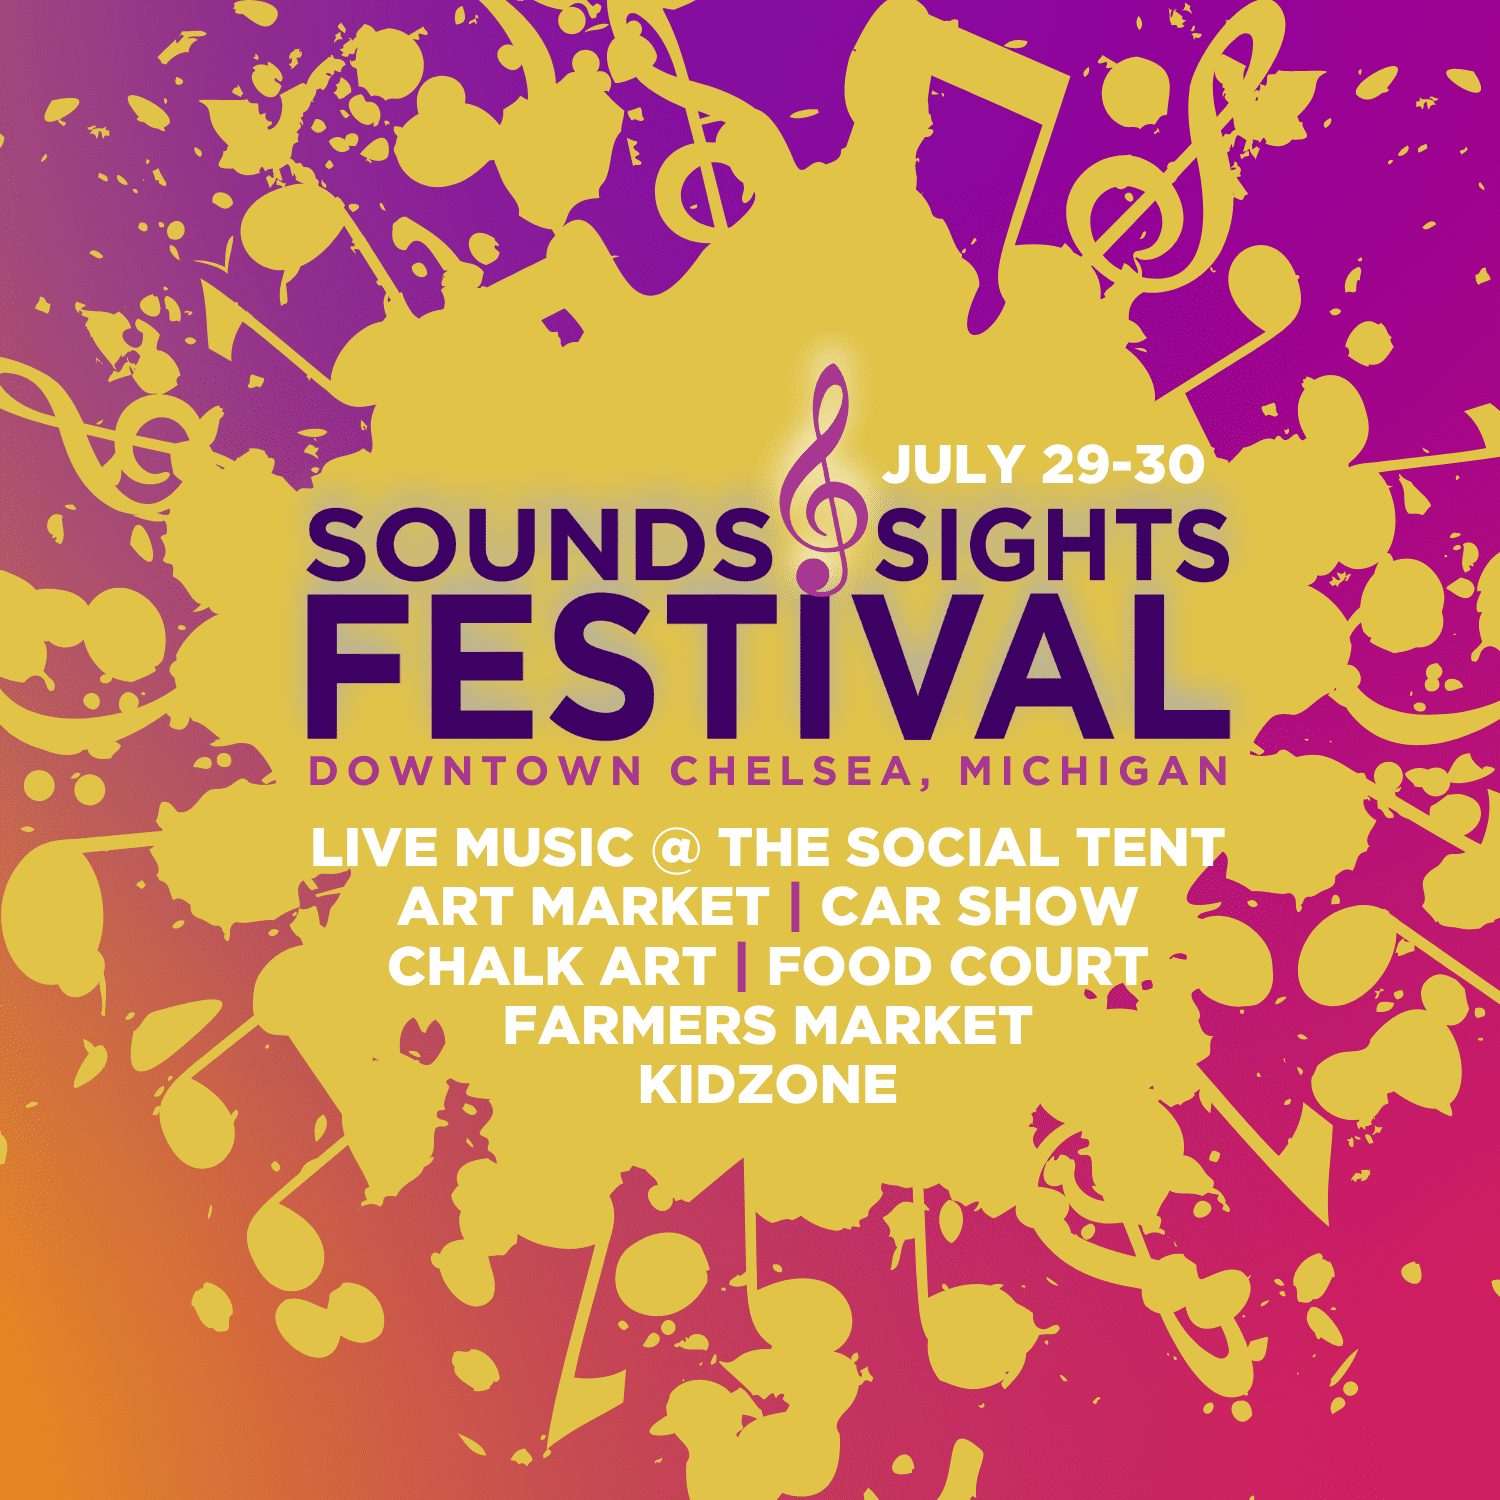 Sounds & Sights Festival | Chelsea Michigan | chelseamich.com